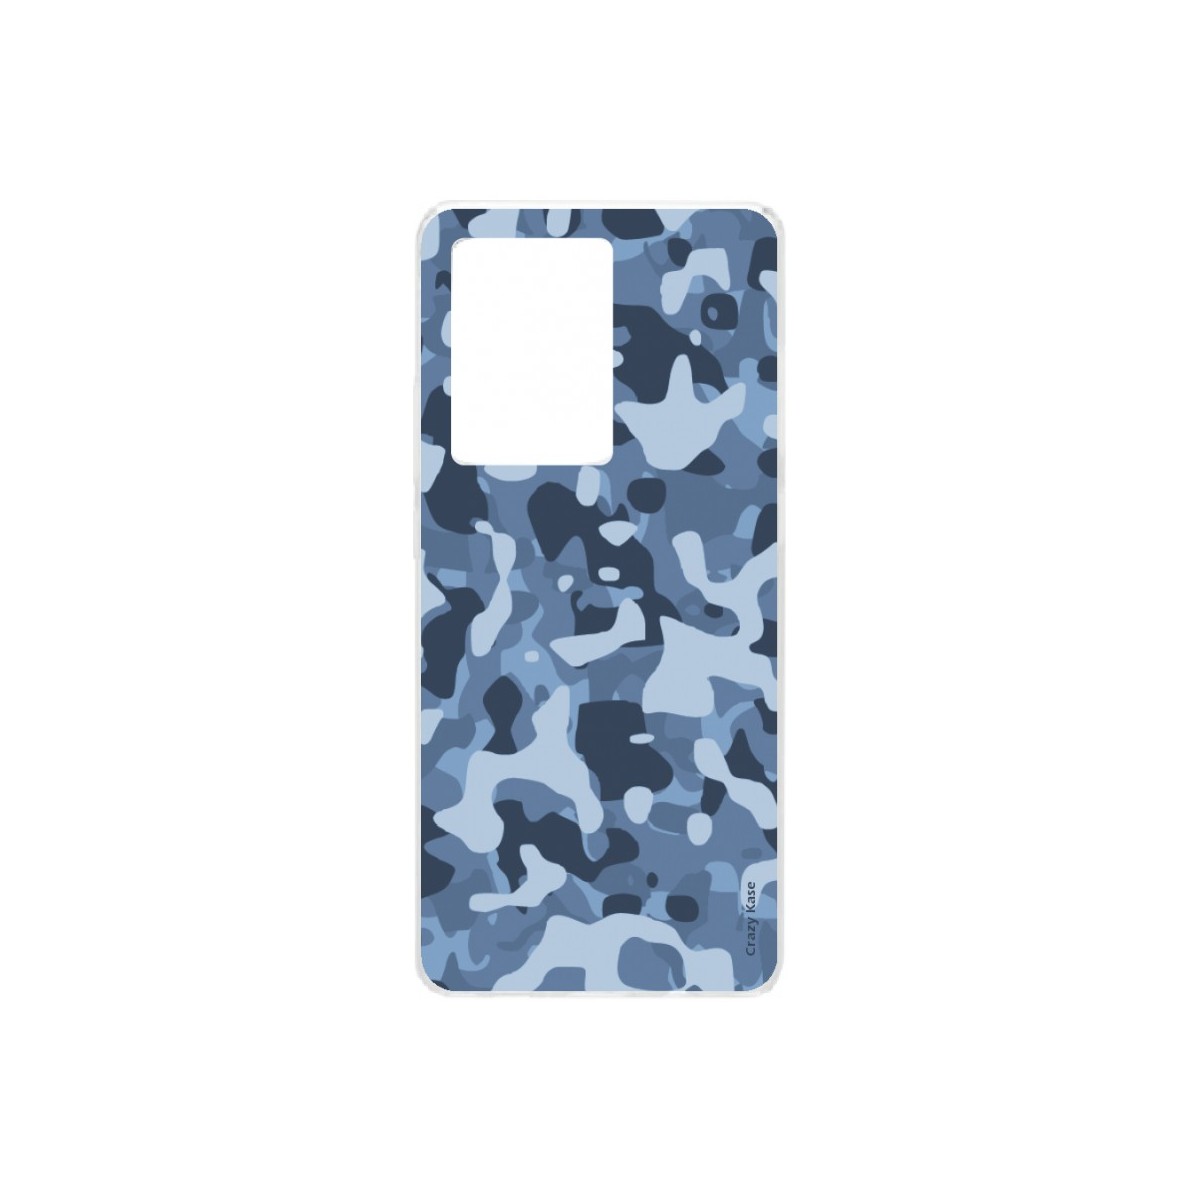 Coque Samsung Galaxy S20 Ultra souple Camouflage militaire bleu Crazy Kase